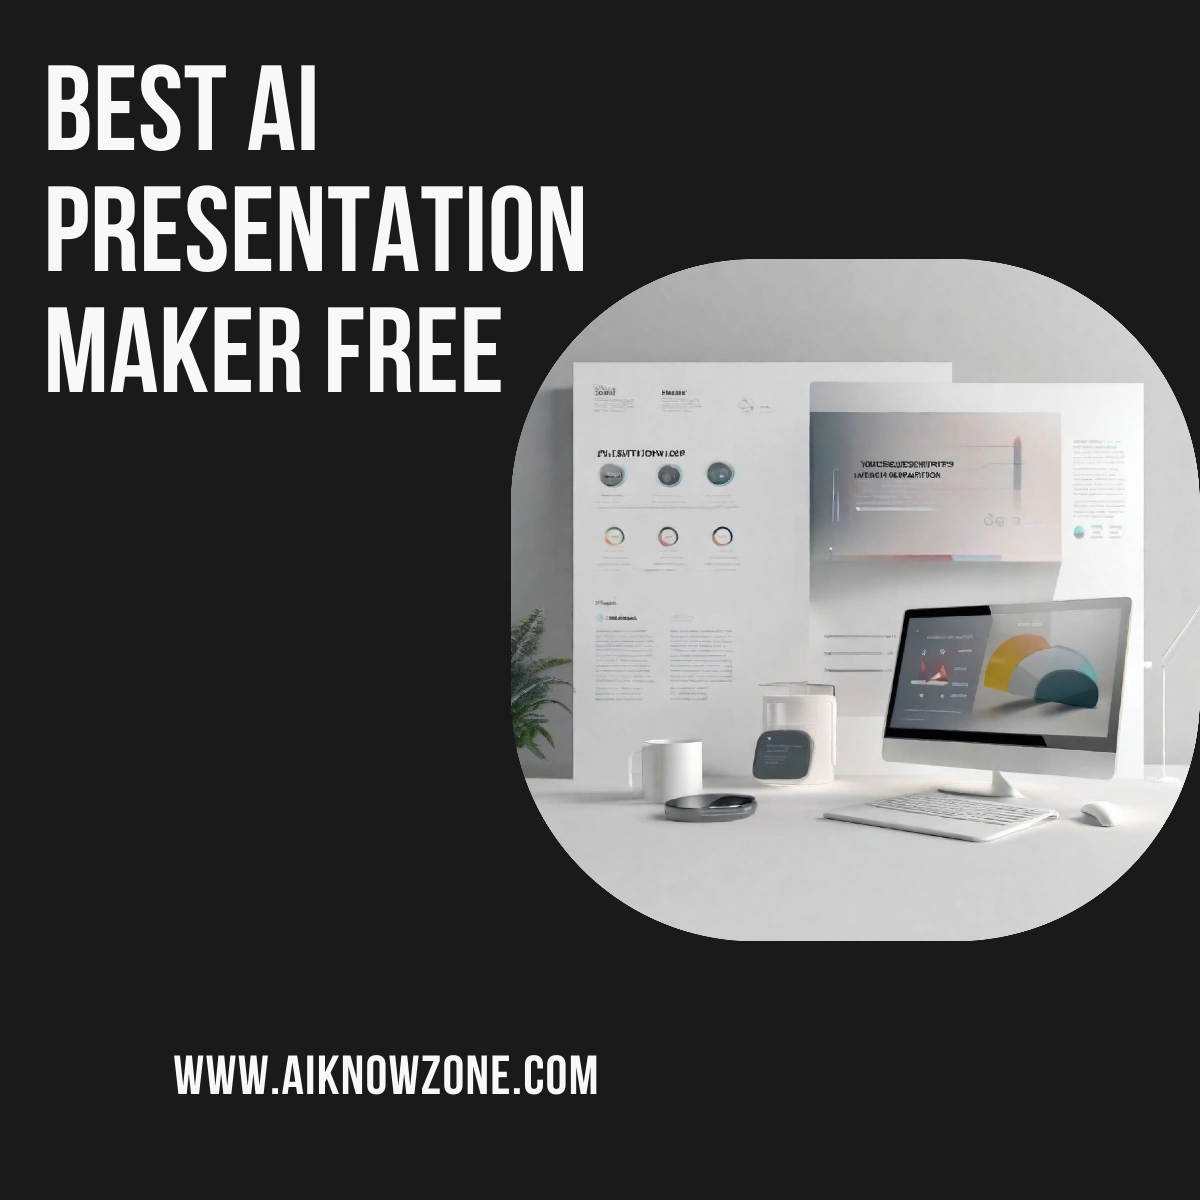 Best AI Presentation Maker Free